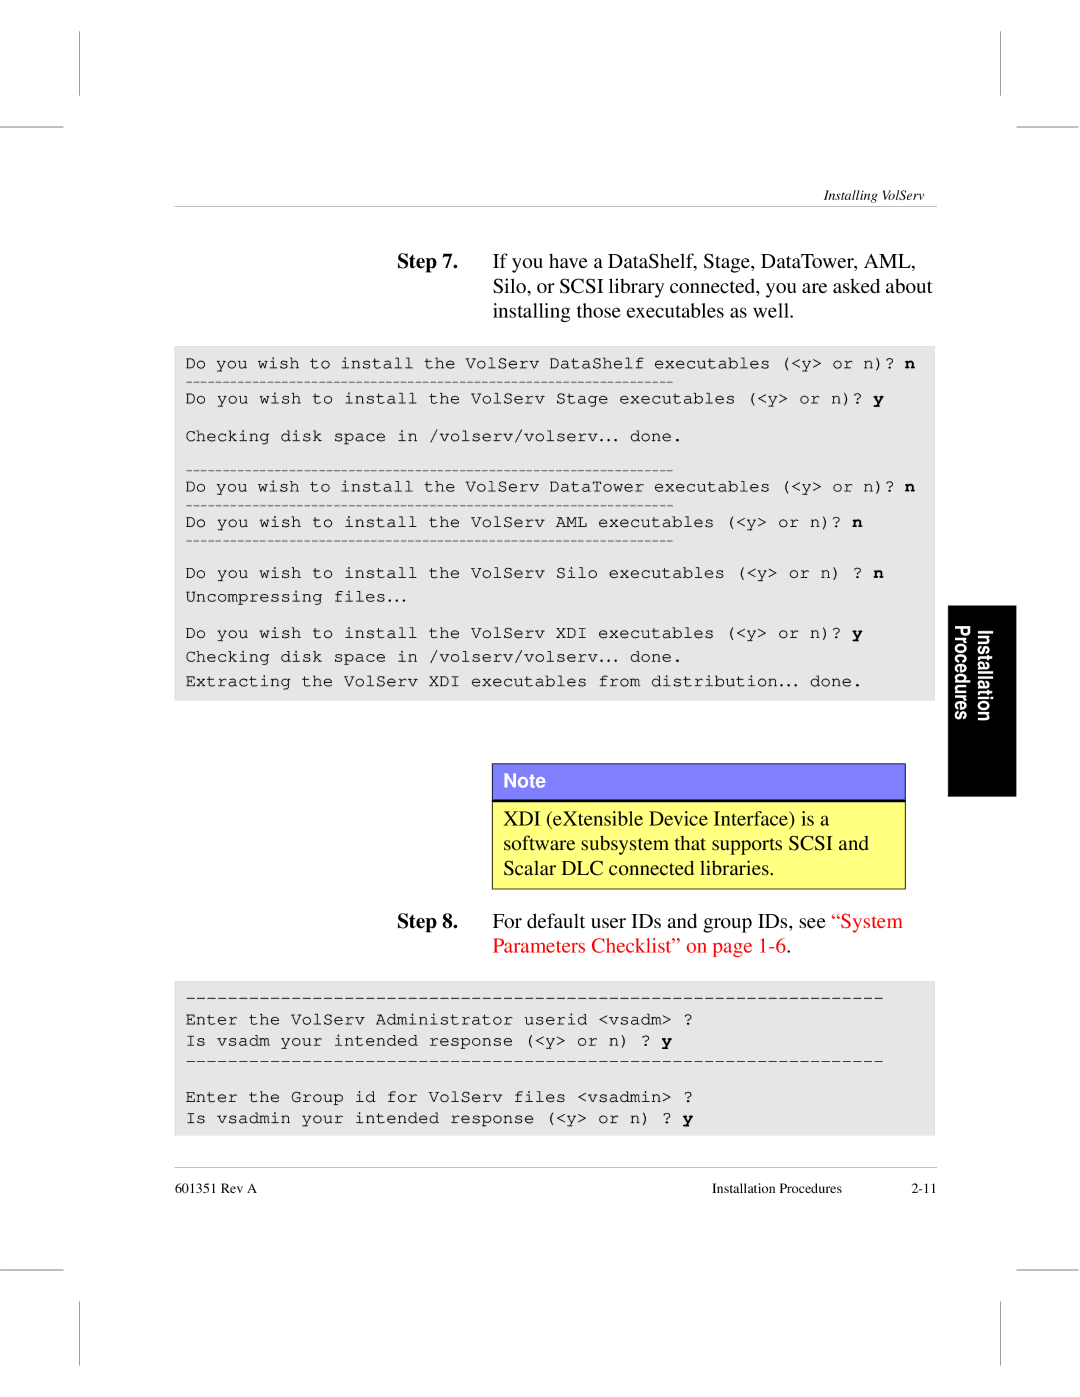 ADIC Version 5.0 manual Parameters Checklist on 